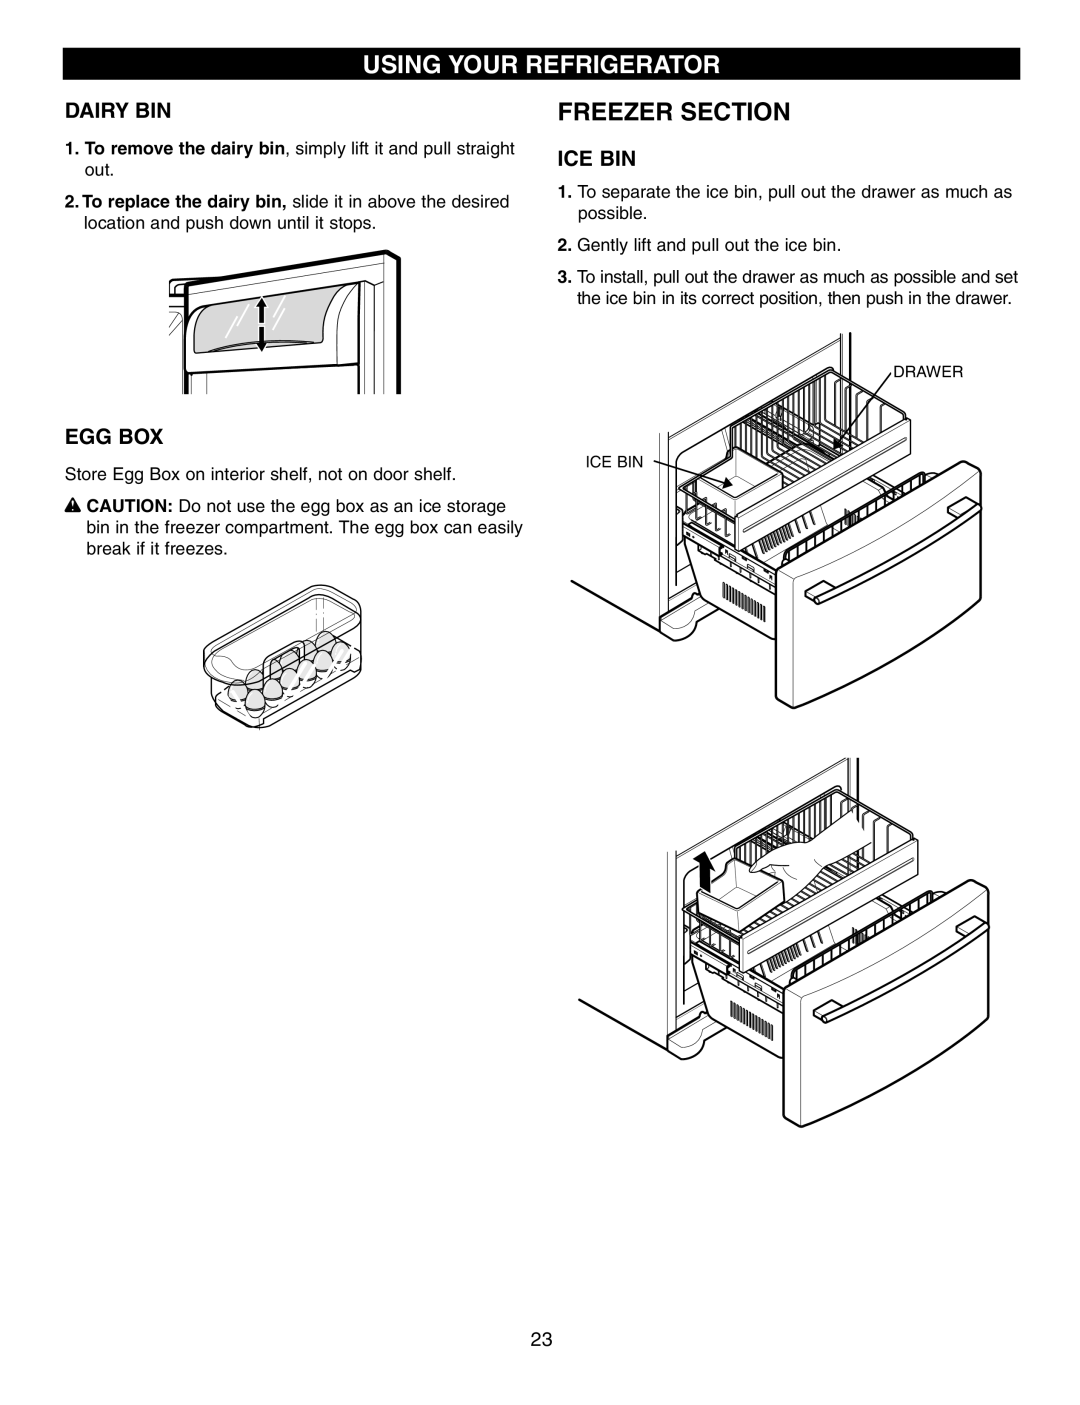 LG Electronics LFC25760 manual Freezer Section, Using Your Refrigerator, Dairy Bin, Ice Bin, Egg Box 